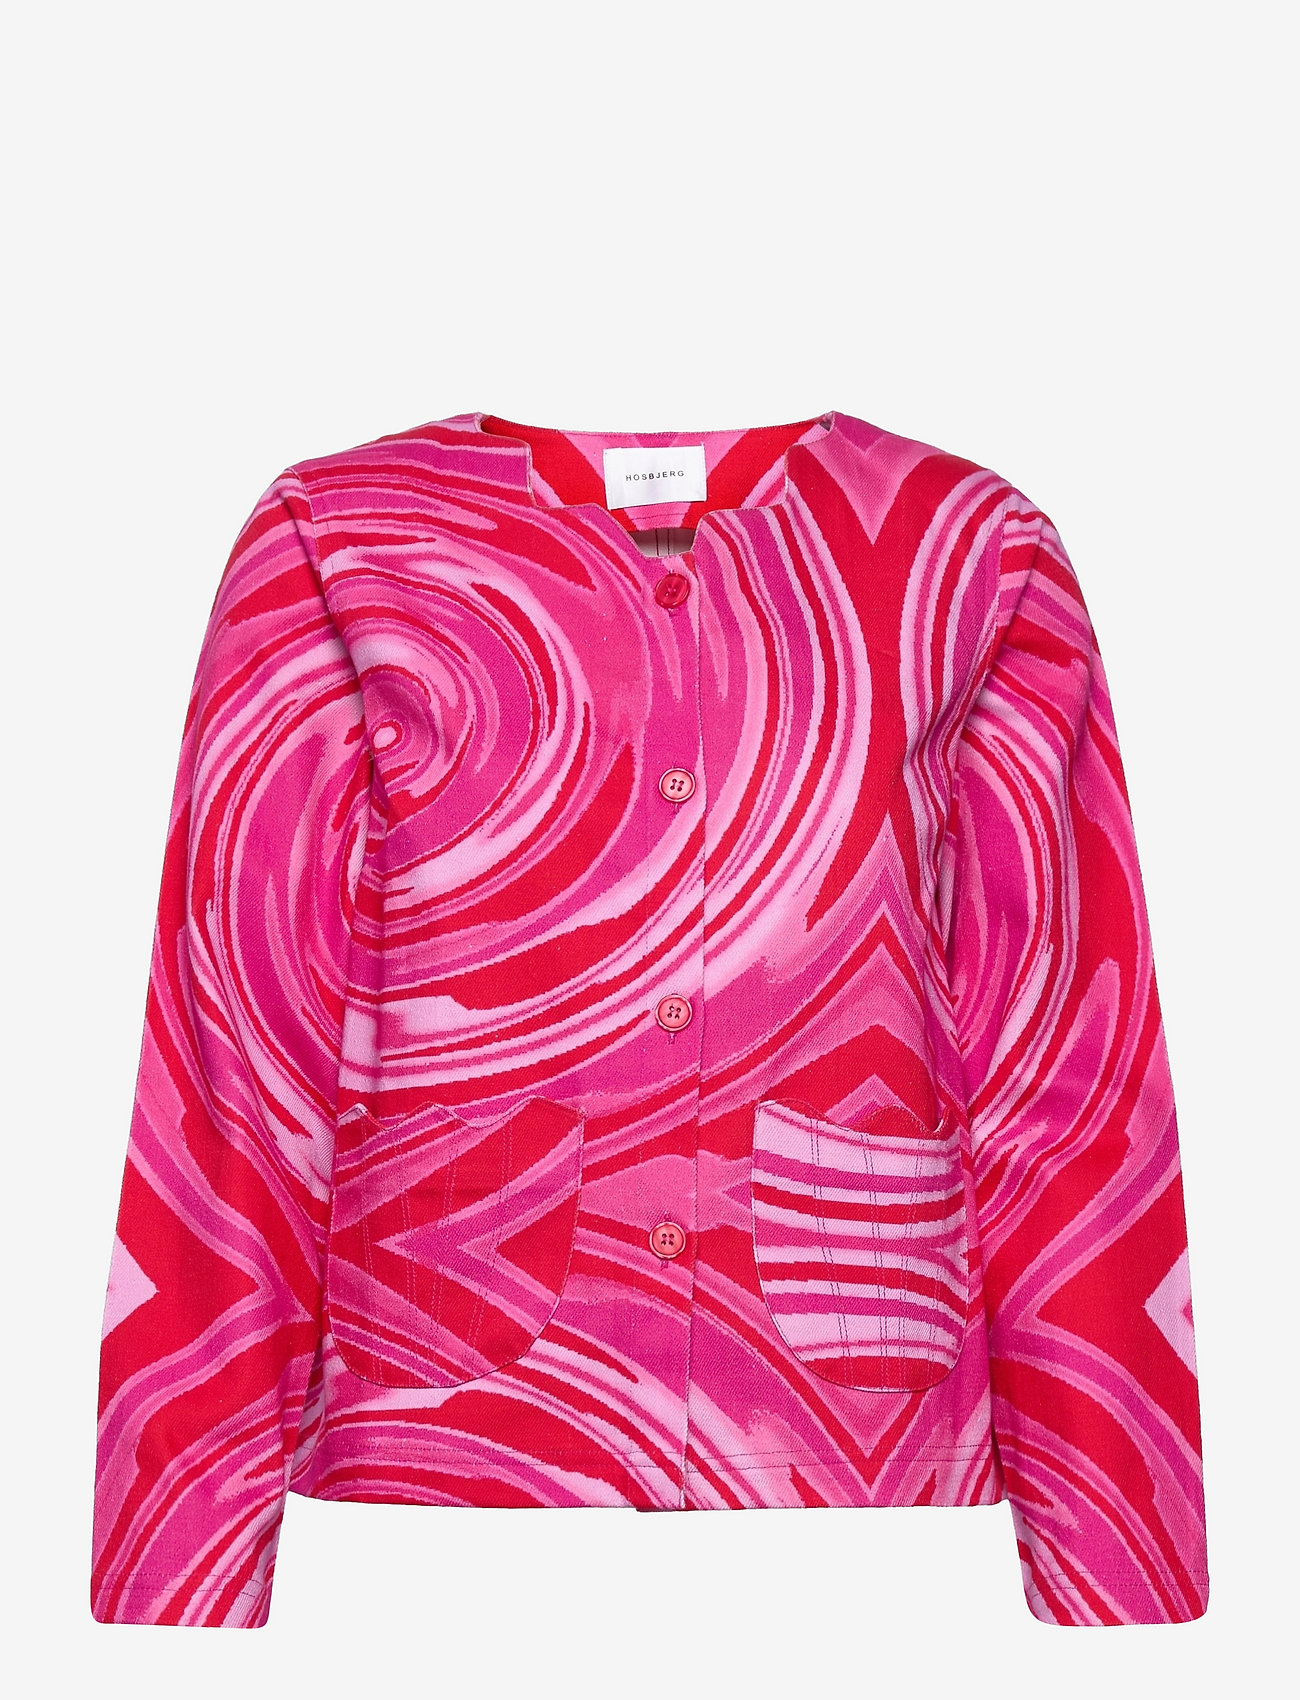 Hosbjerg - Frama Shirt - women - swirl pink - 0